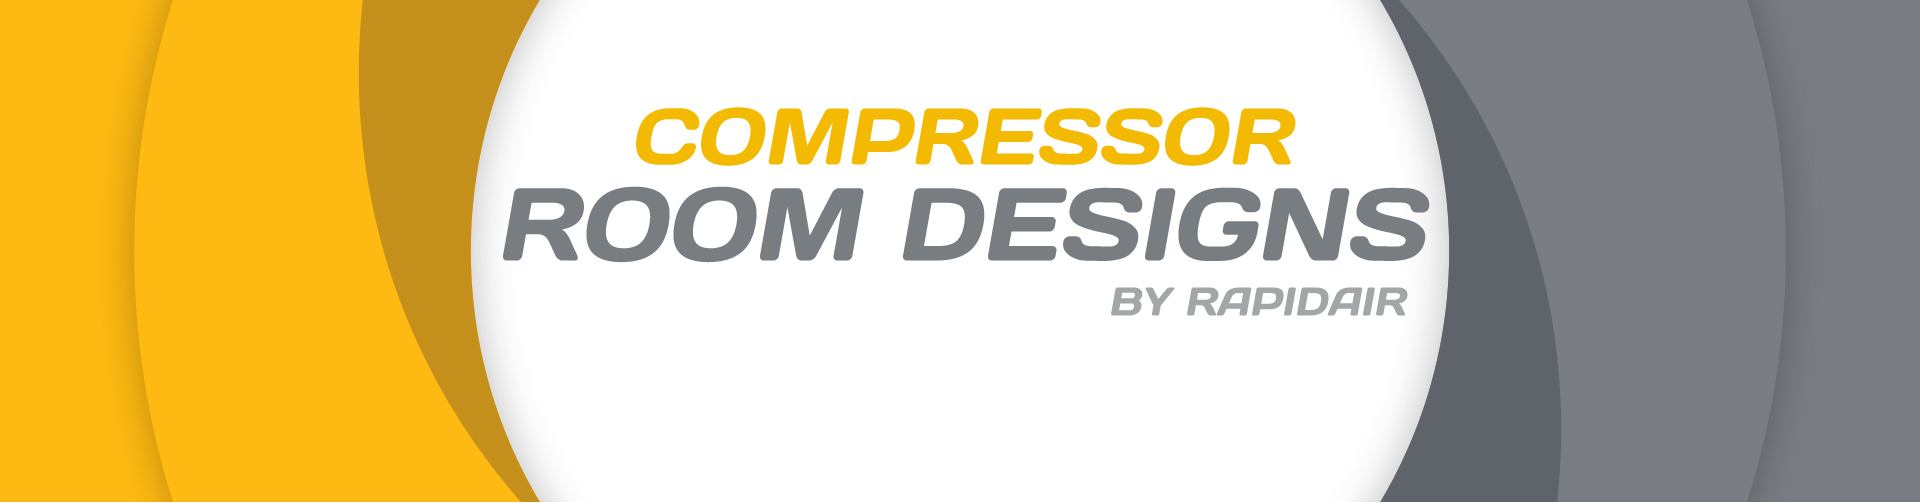 Compressor Room Designs